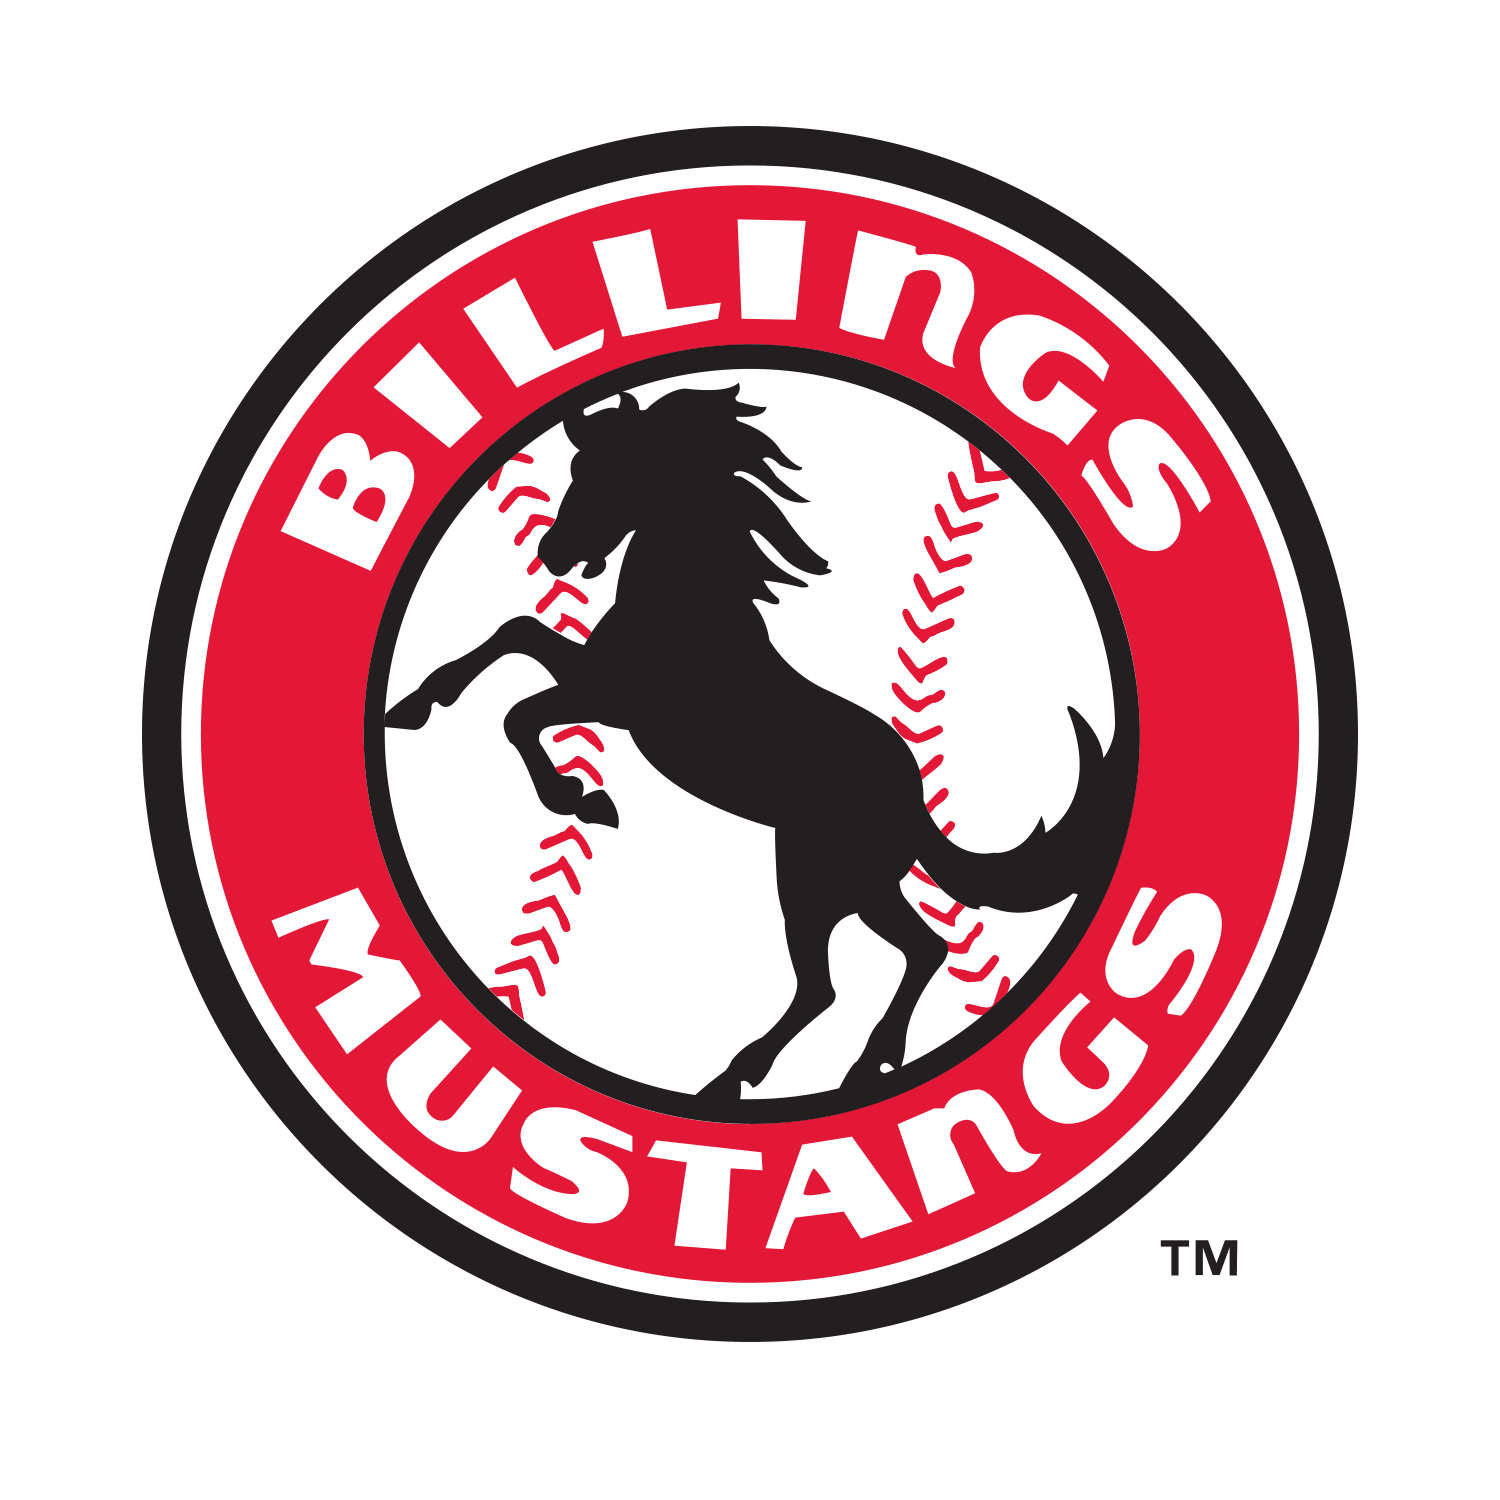 Billings Mustangs